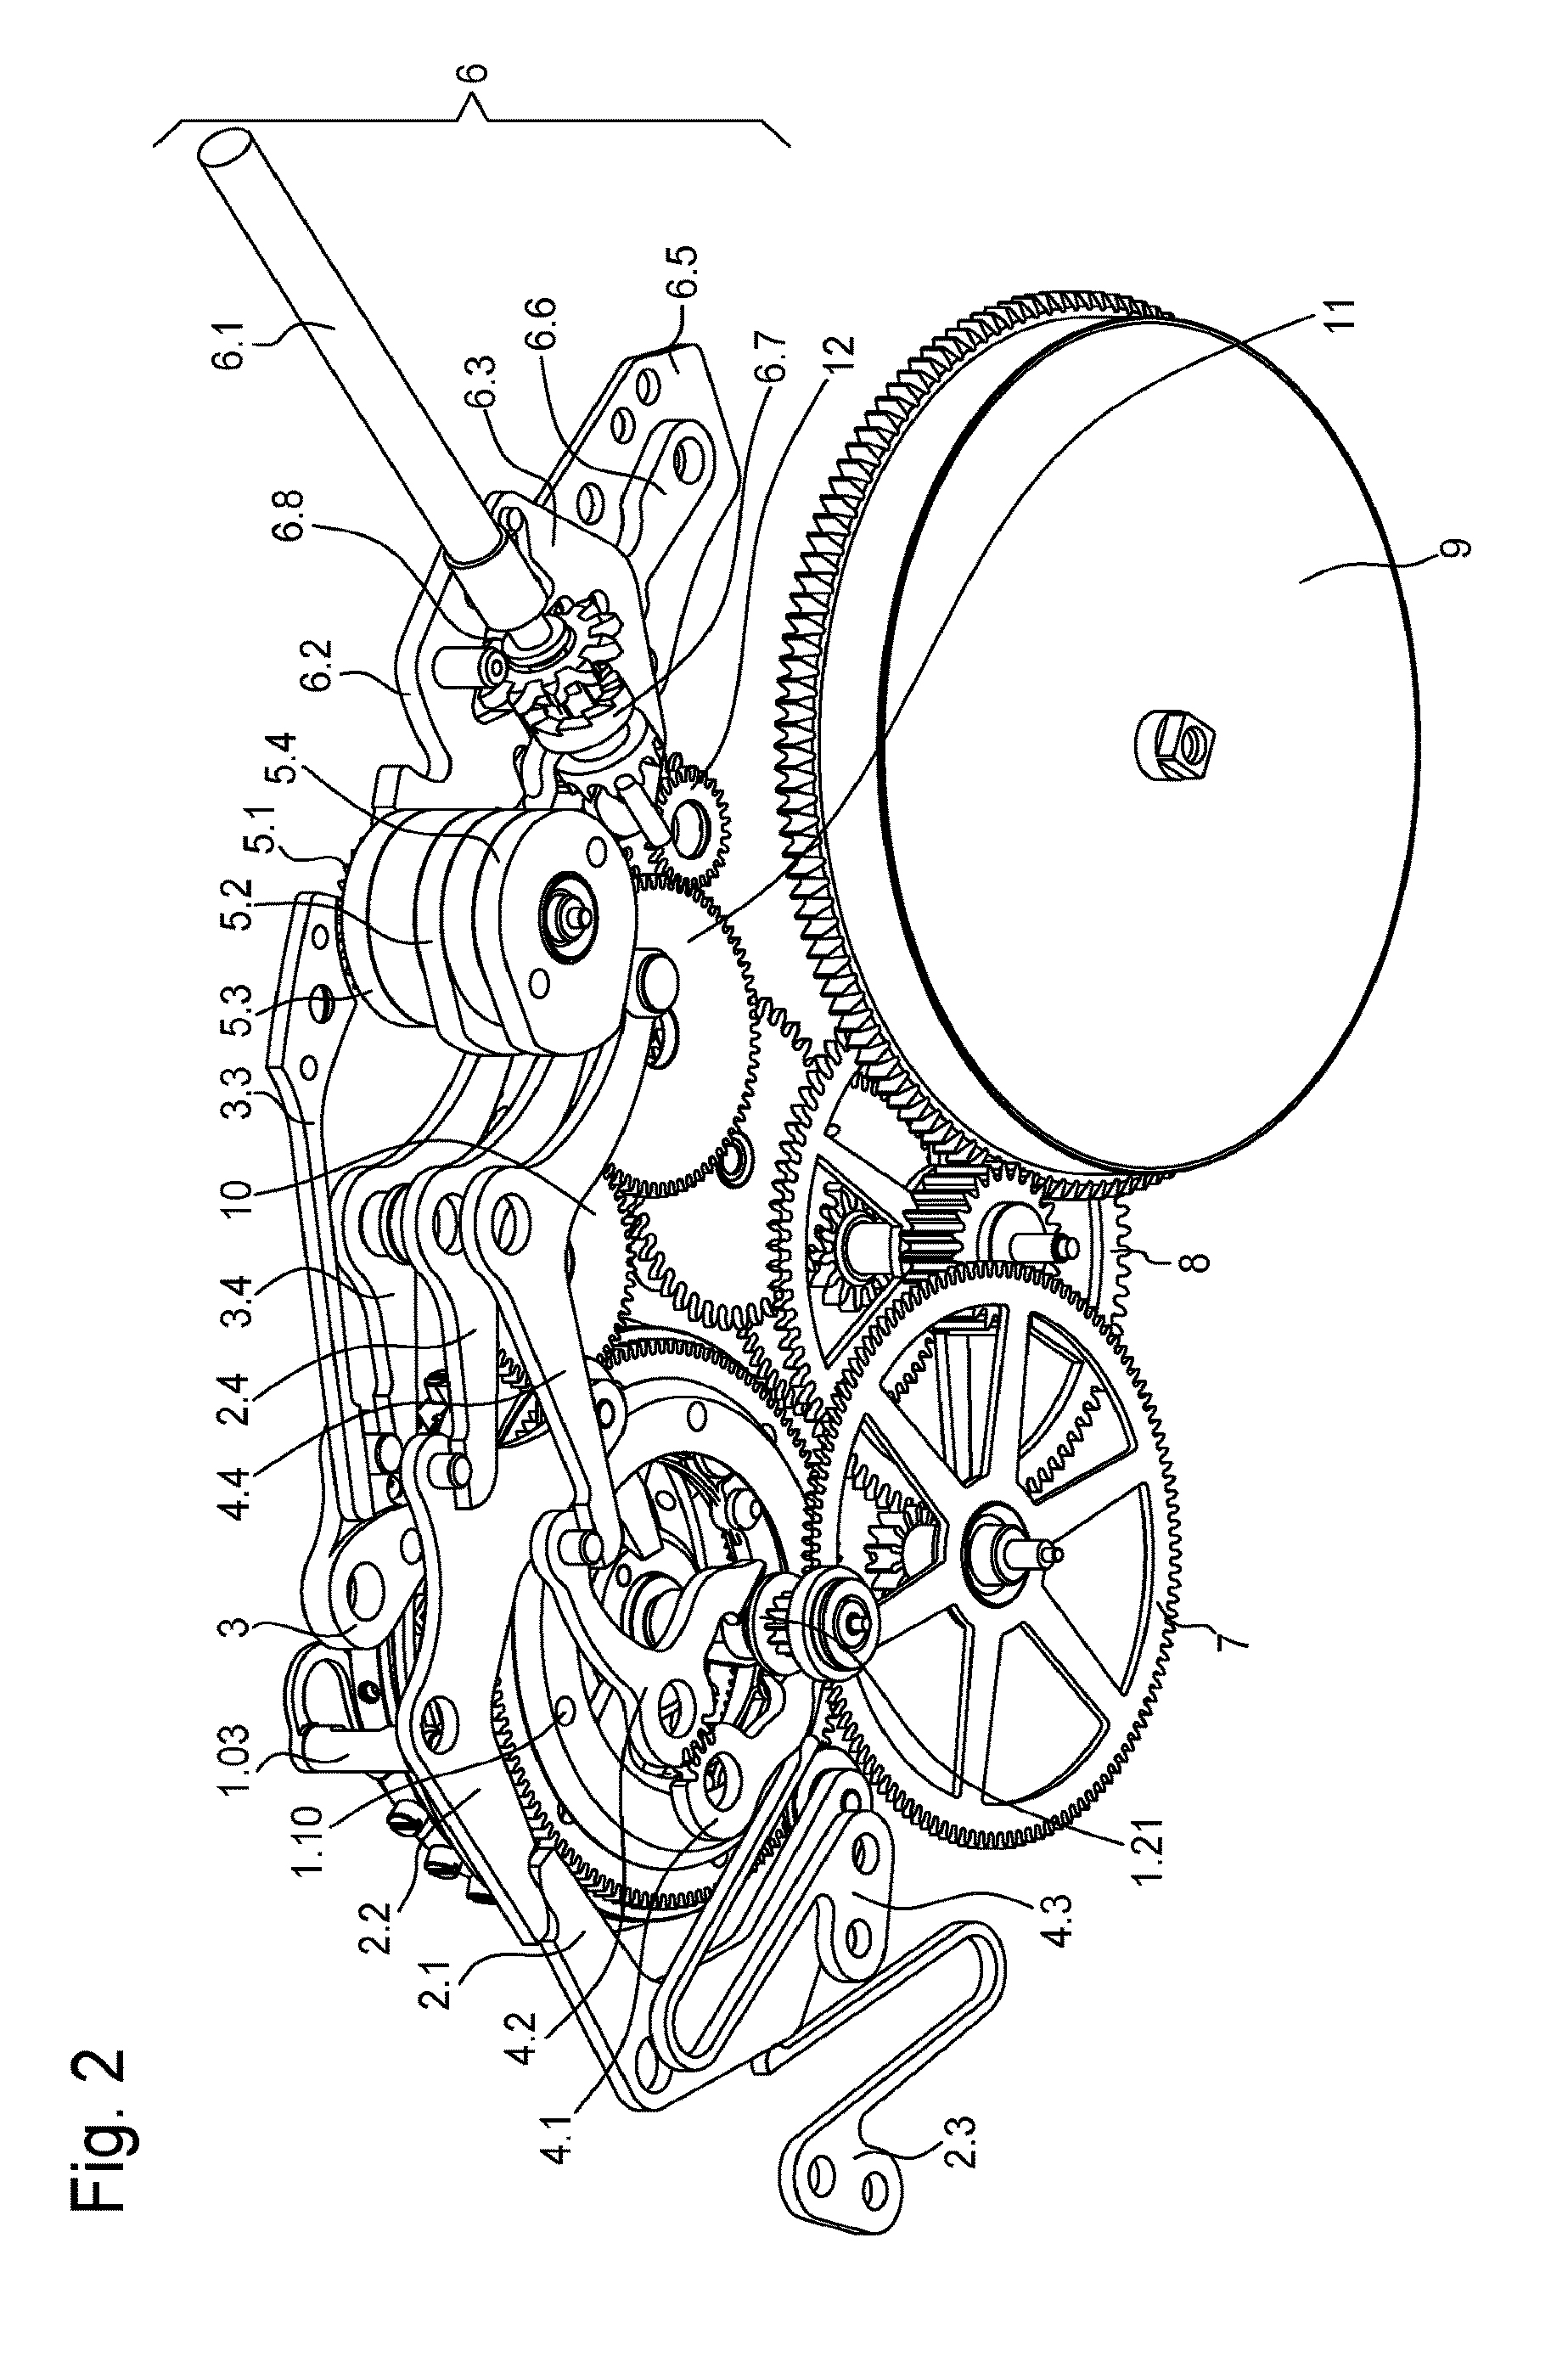 Mechanical clockwork movement with an adjustable tourbillon